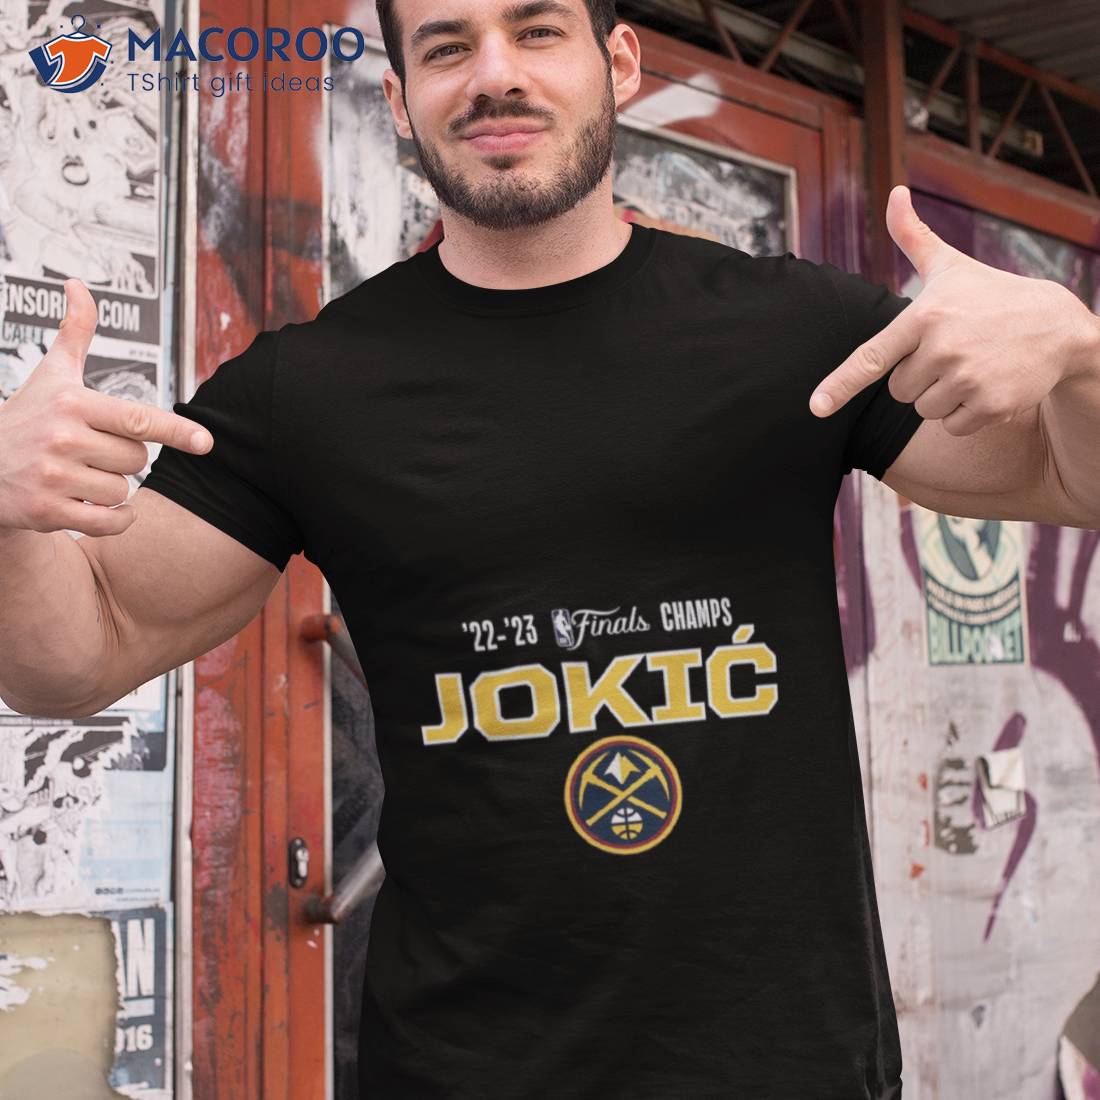 Nikola Jokic Denver Nuggets Shirt Vintage Tee NBA 